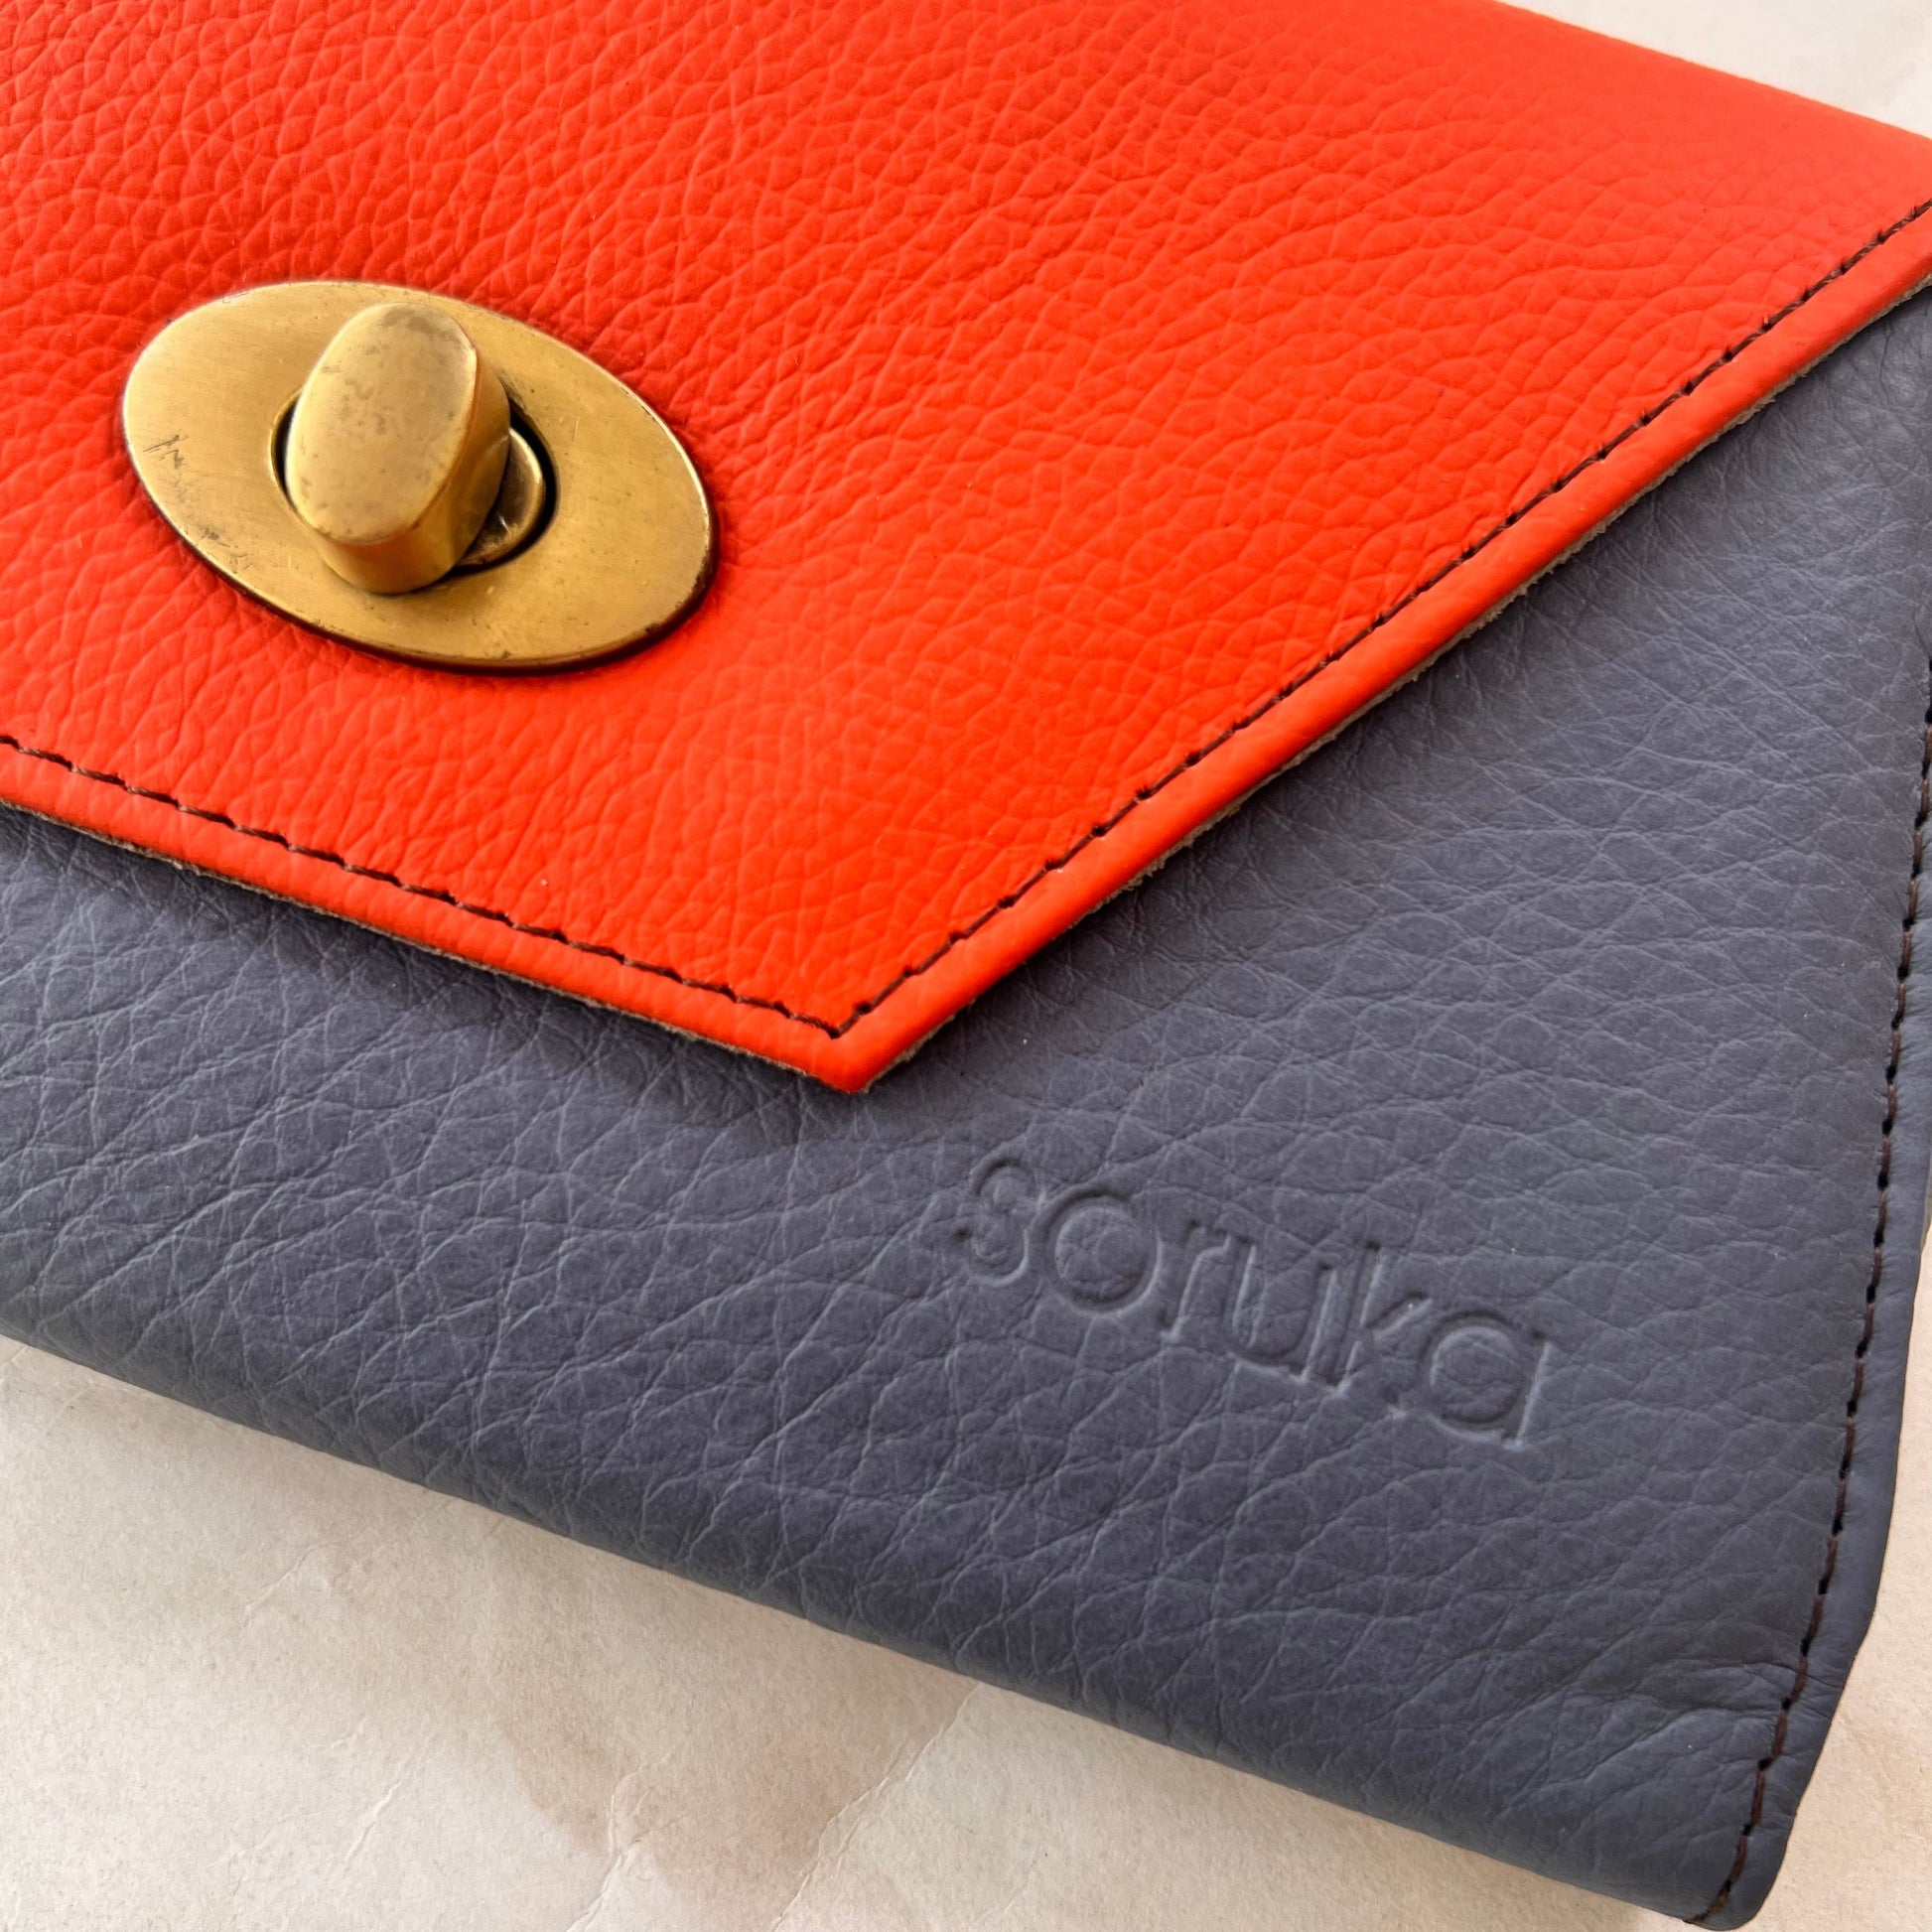 close-up of blue secret clutch wallet with orange flap.